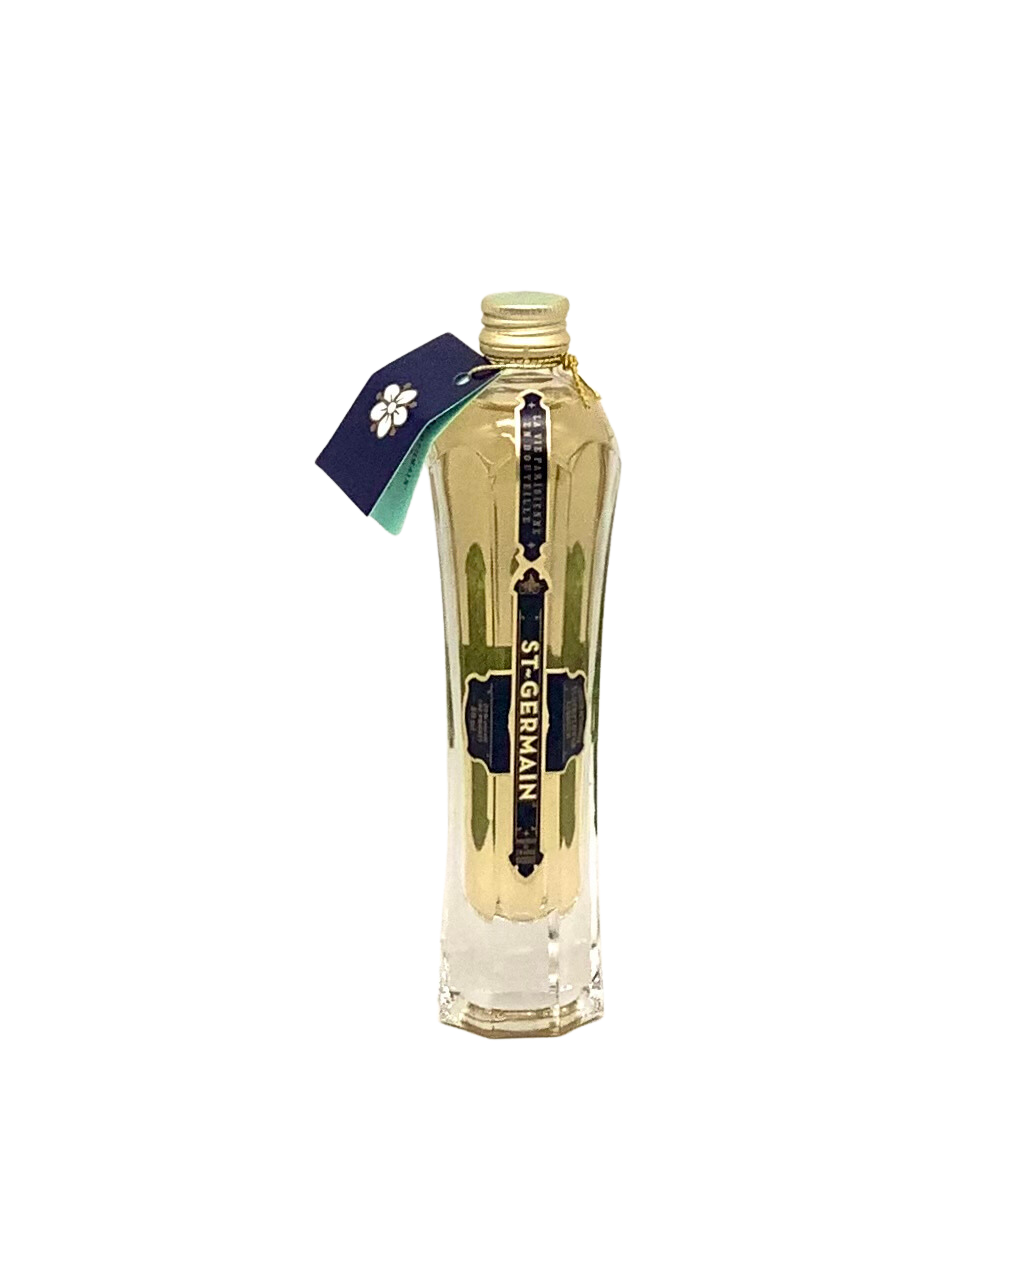 St. Germain - Elderflower Liqueur - Rocky Mountain Liquor